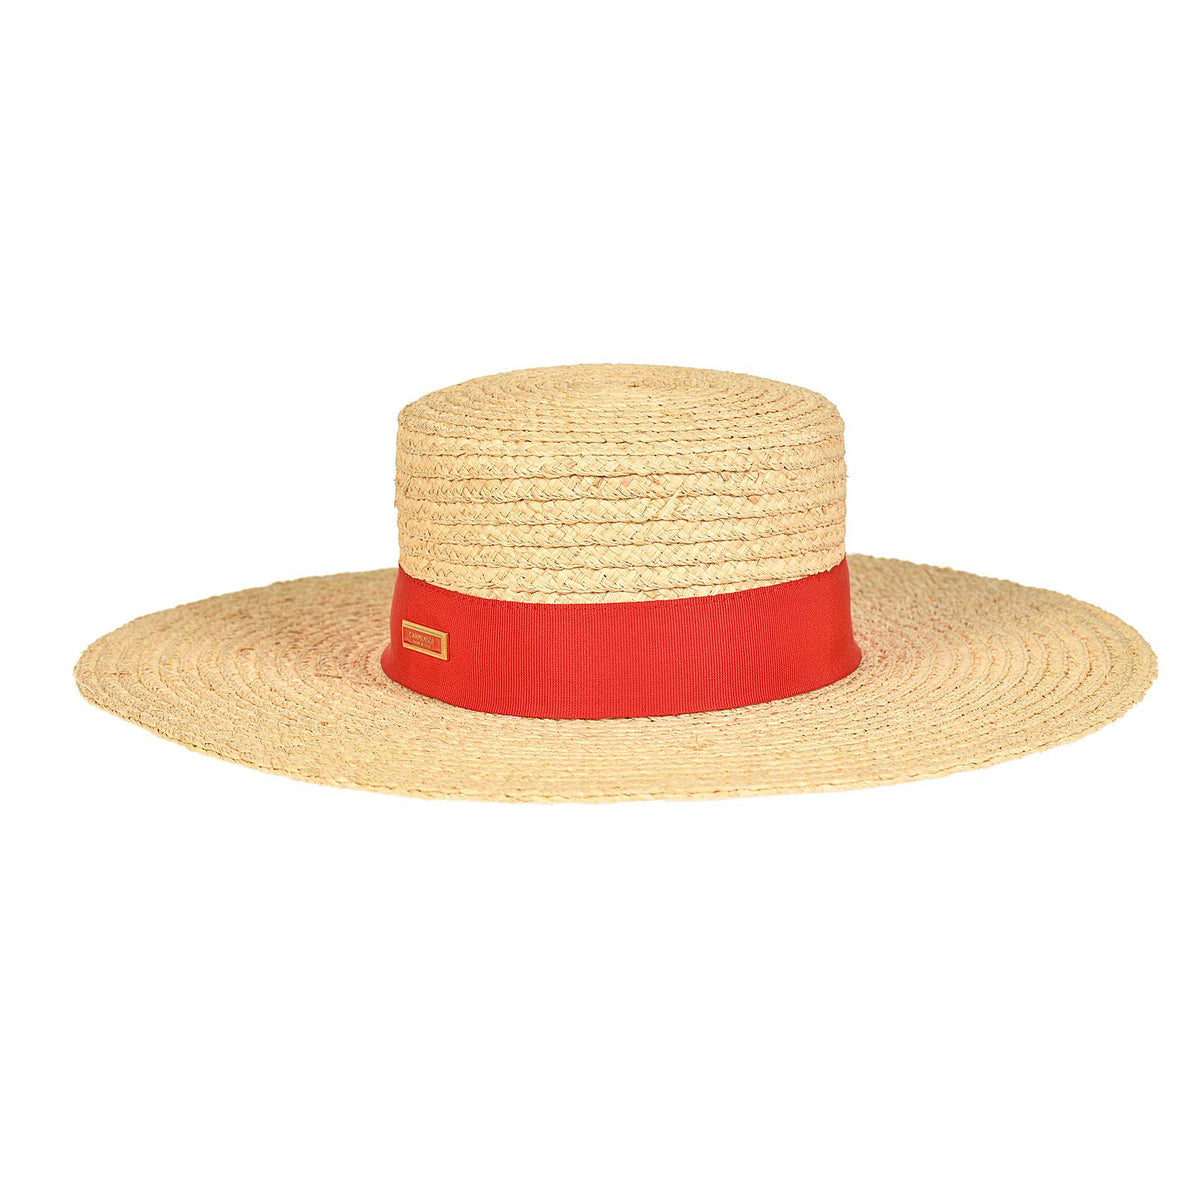 Made in Italy Carmen Sol Mirtha raffia wide brim sun hat in color red